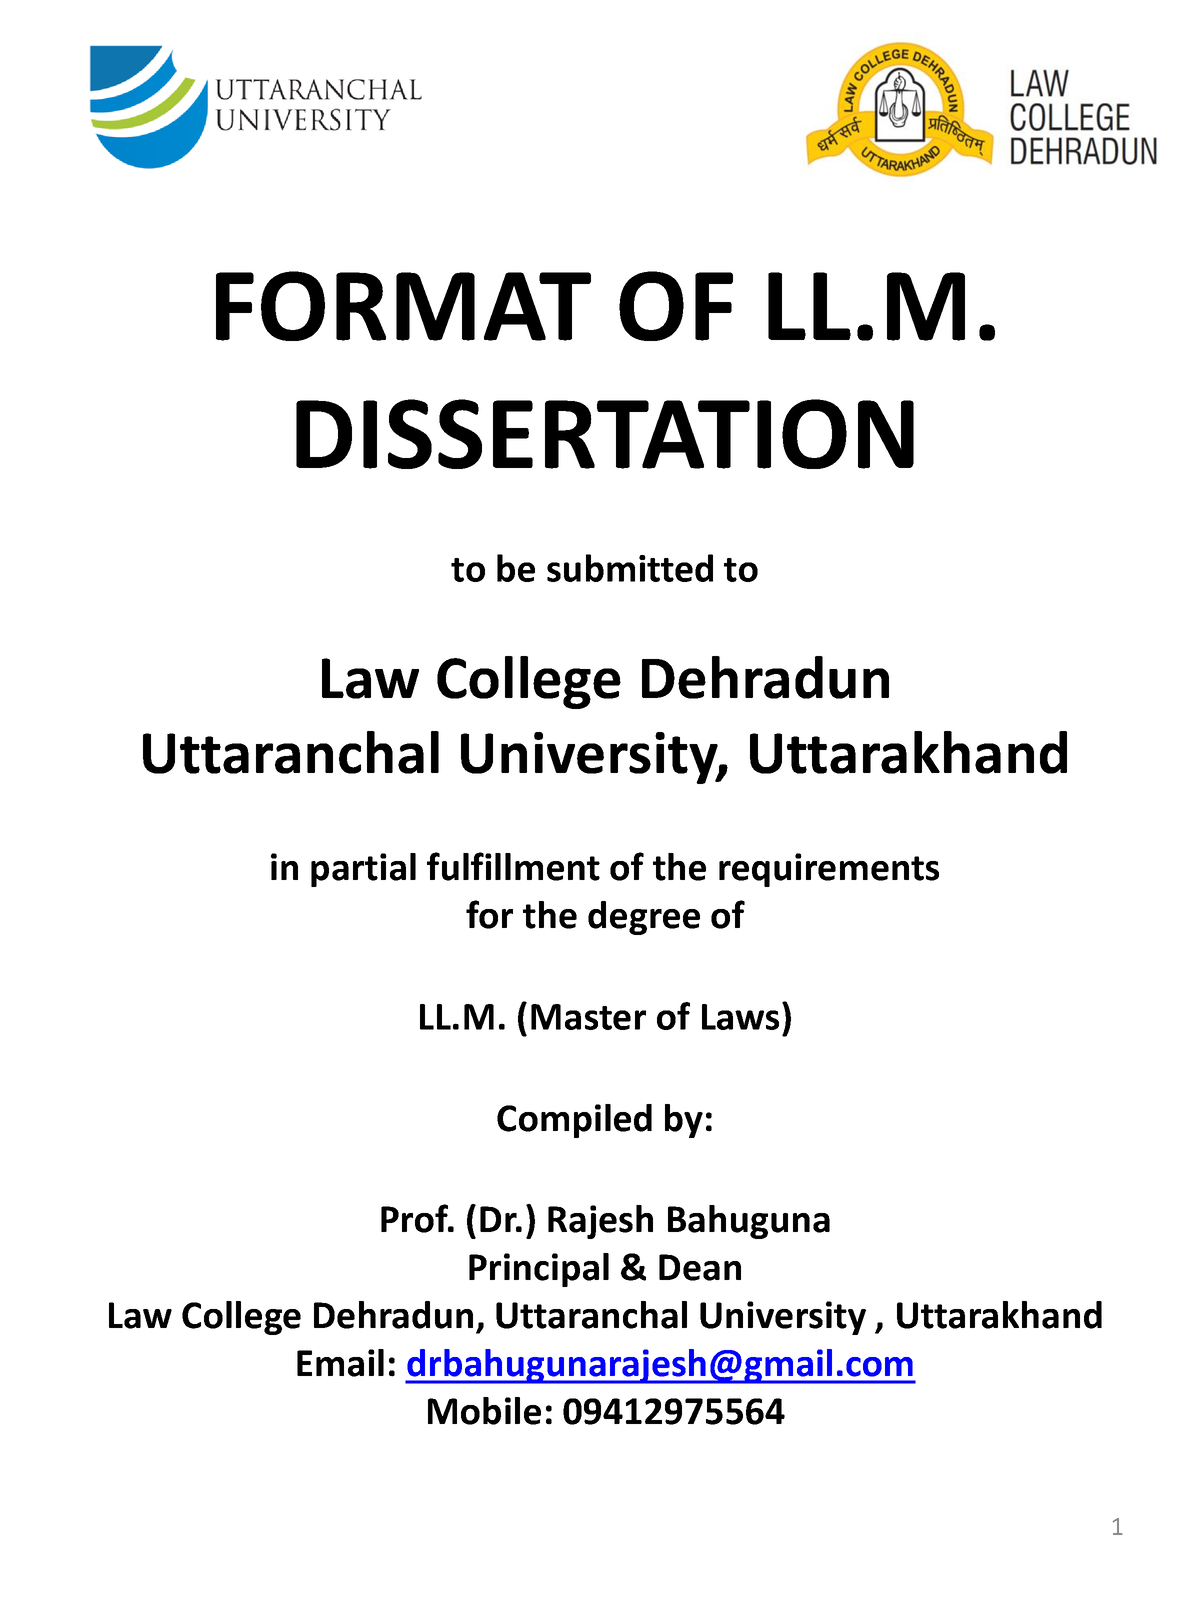 dissertation in dehradun